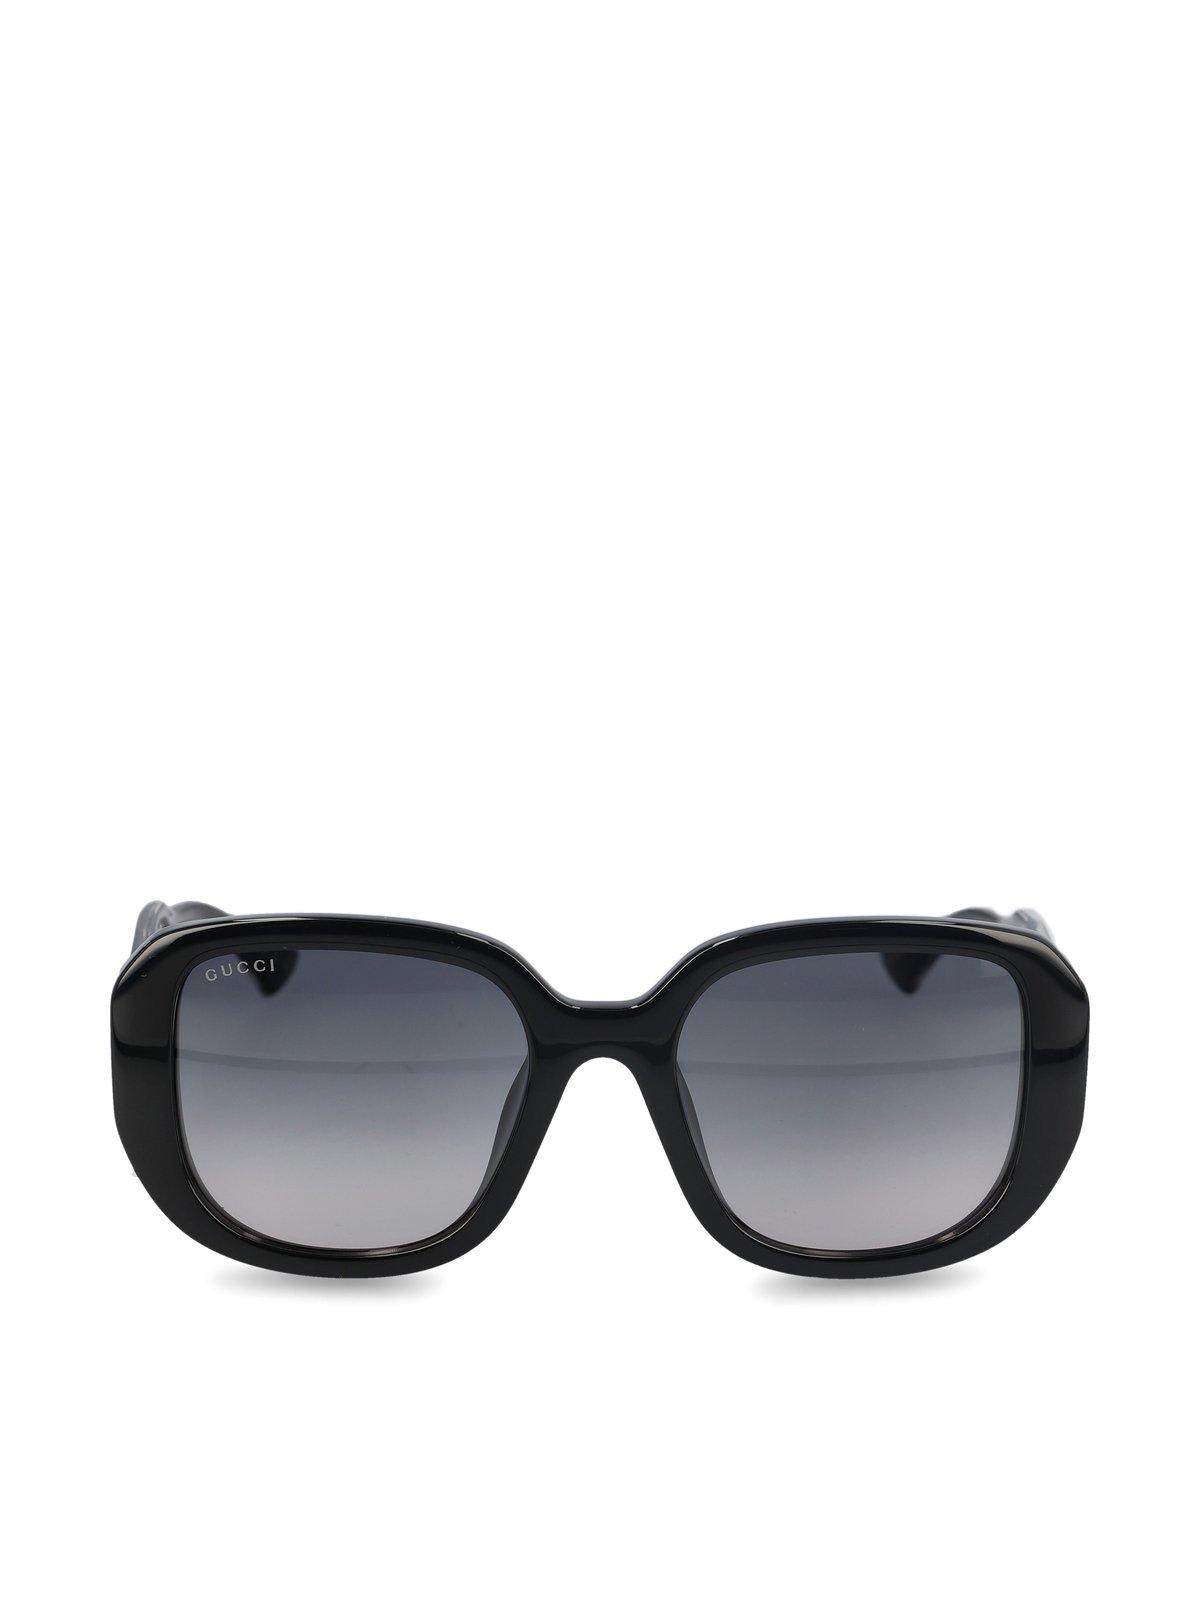 Gucci Round Frame Sunglasses In Gray